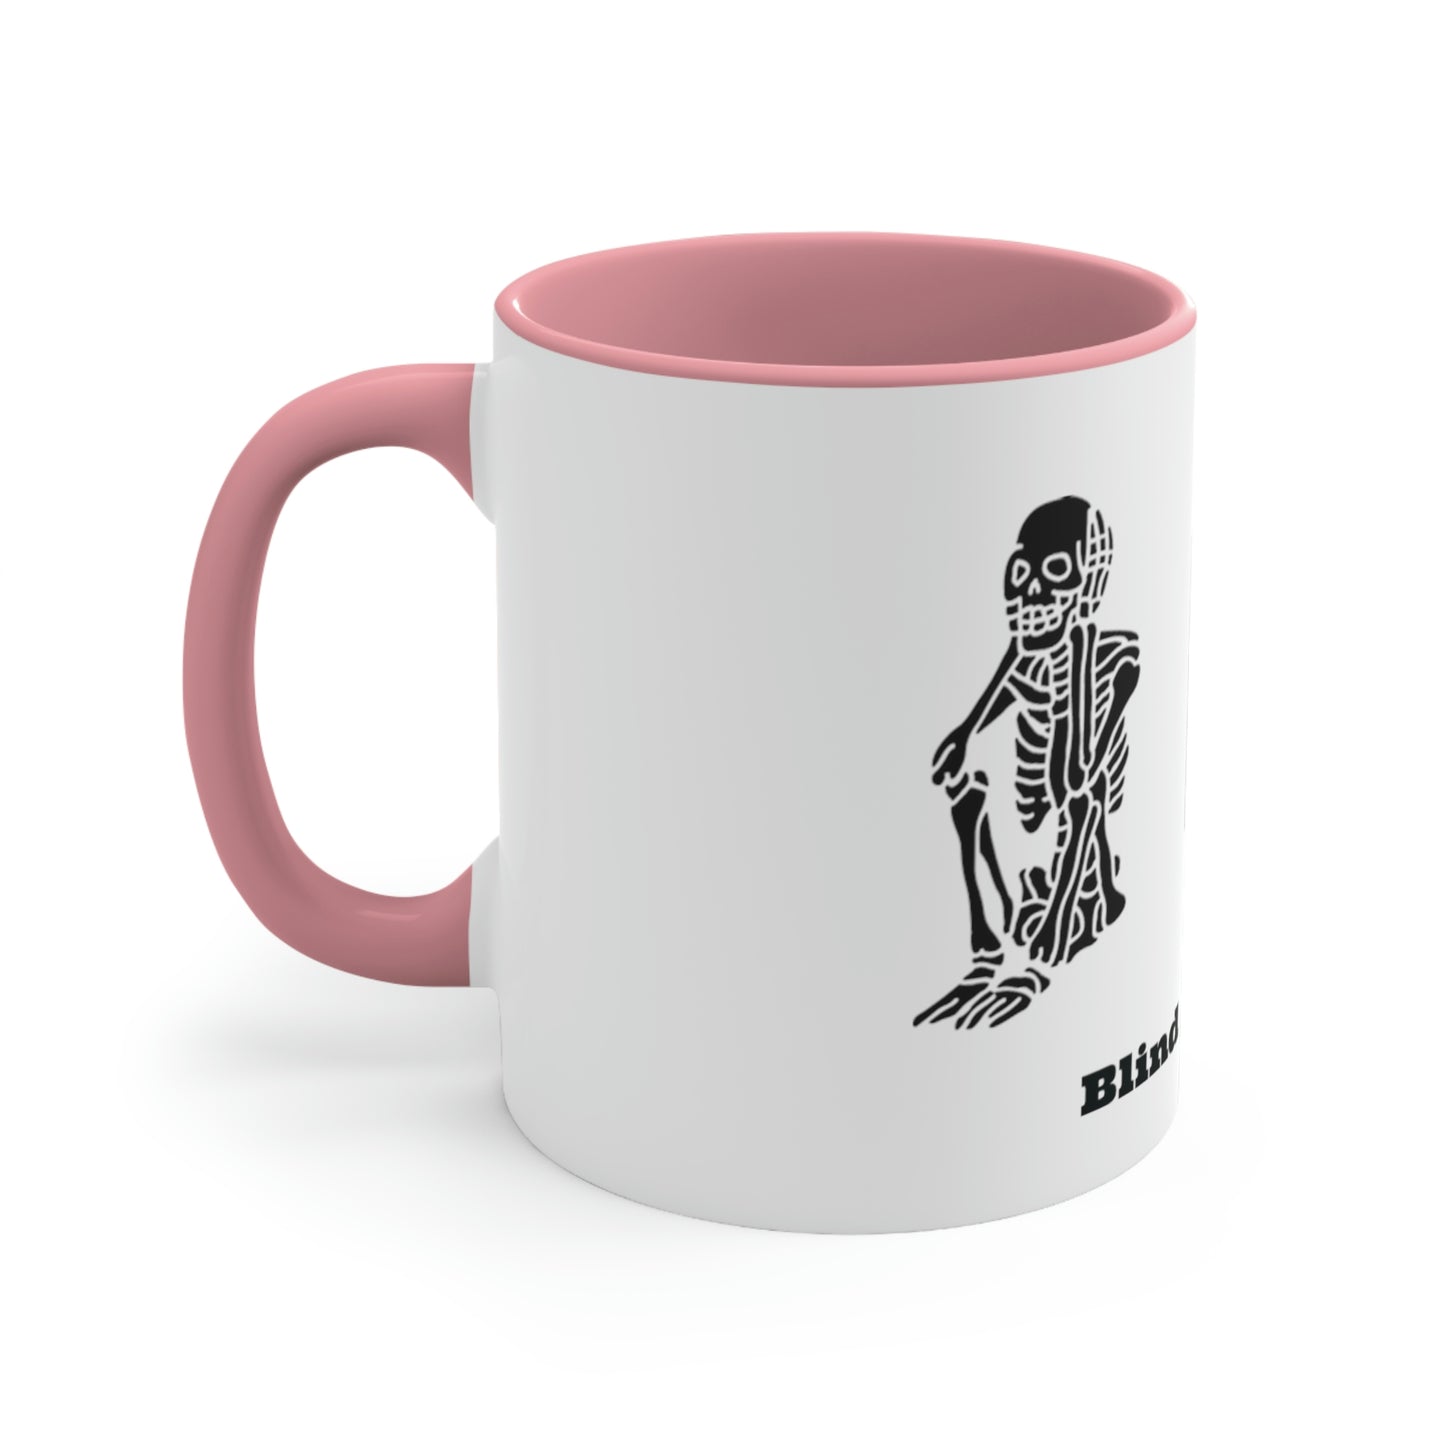 Classic Blind Skeleton Accent Coffee Mug, 11oz